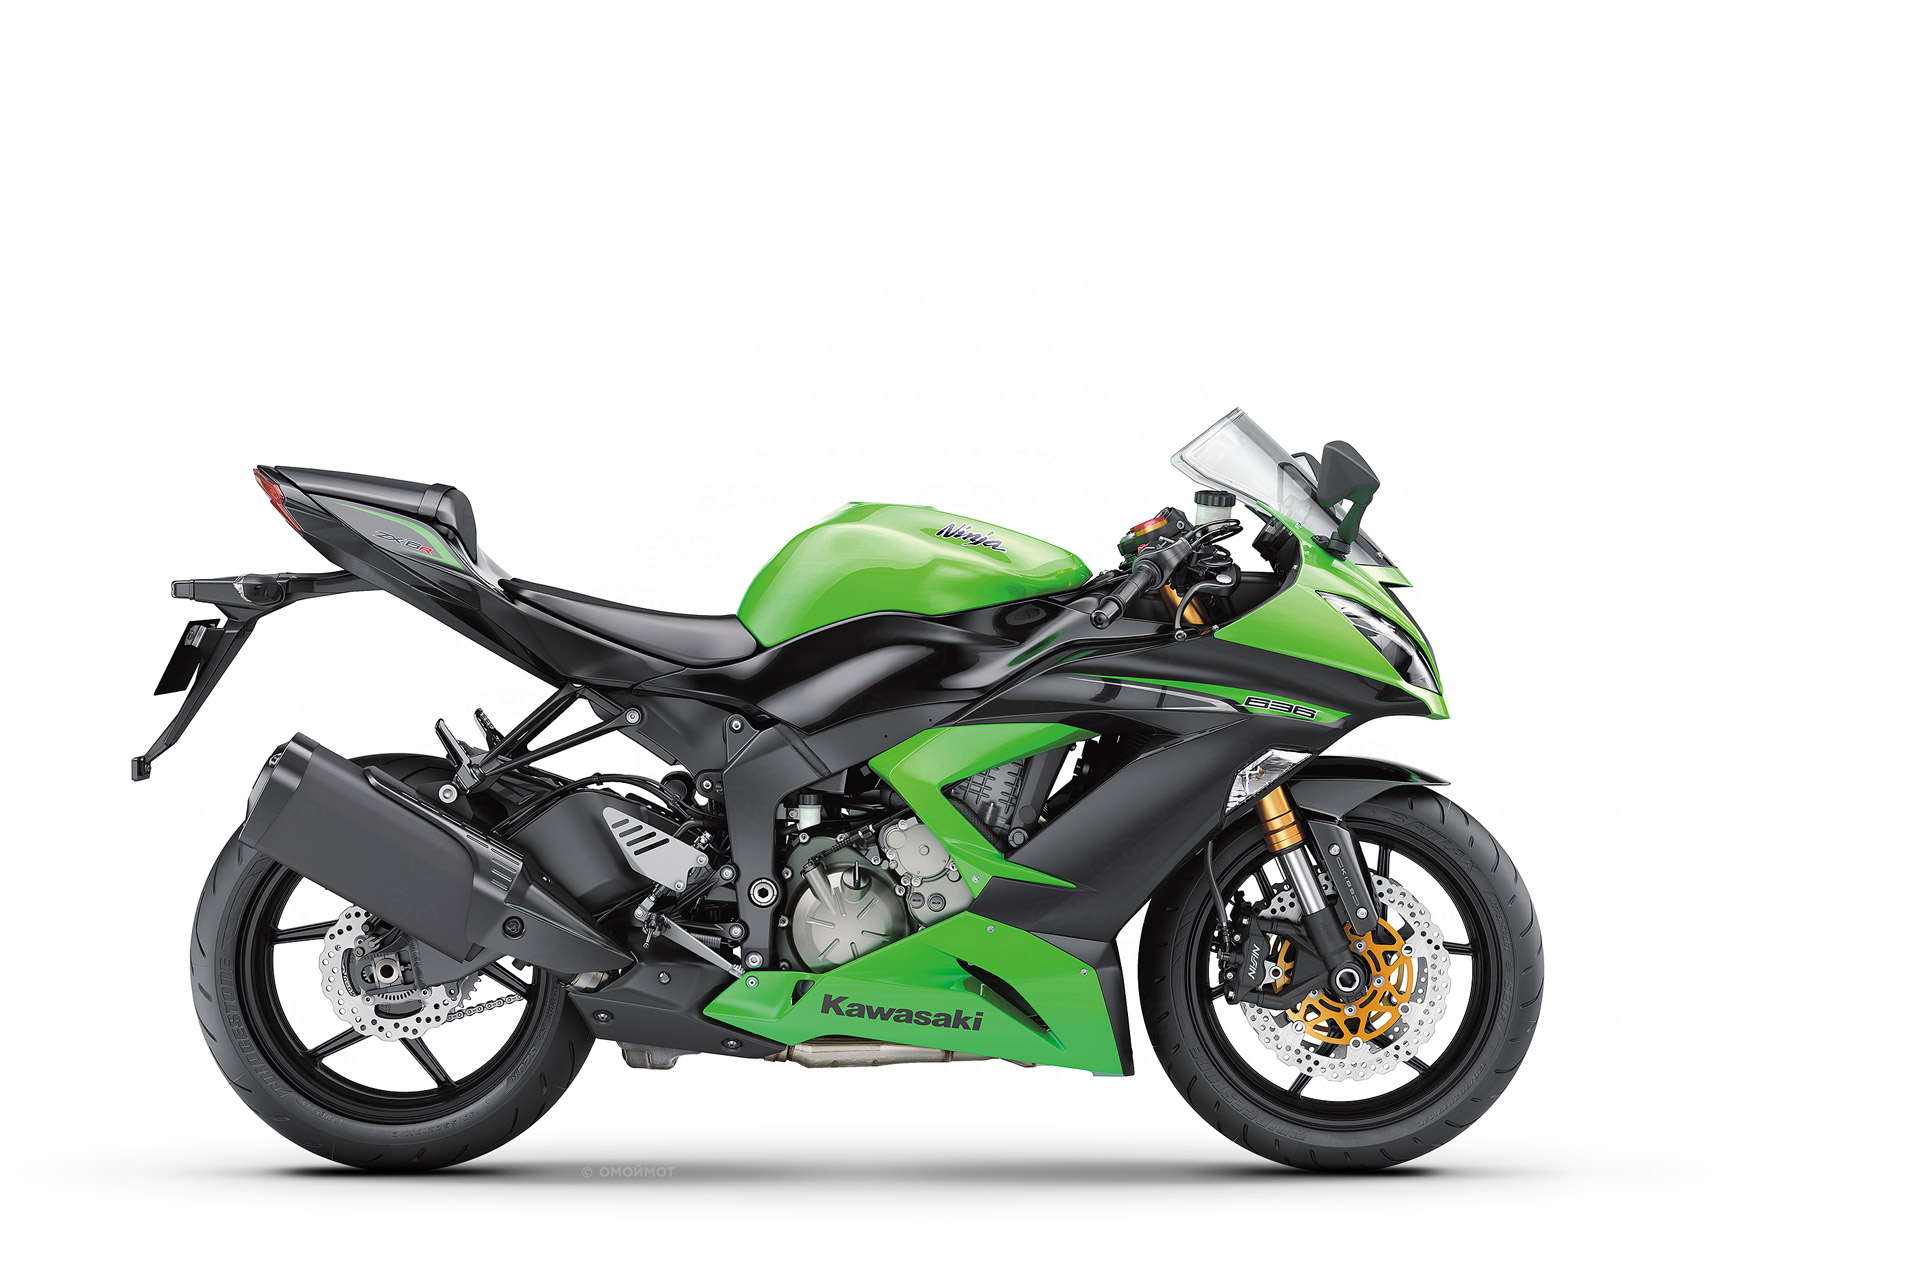 Мотоцикл Kawasaki Ninja ZX-6R – цена, фото и характеристики нового мотоцикла Кавасаки 2022 модельного года